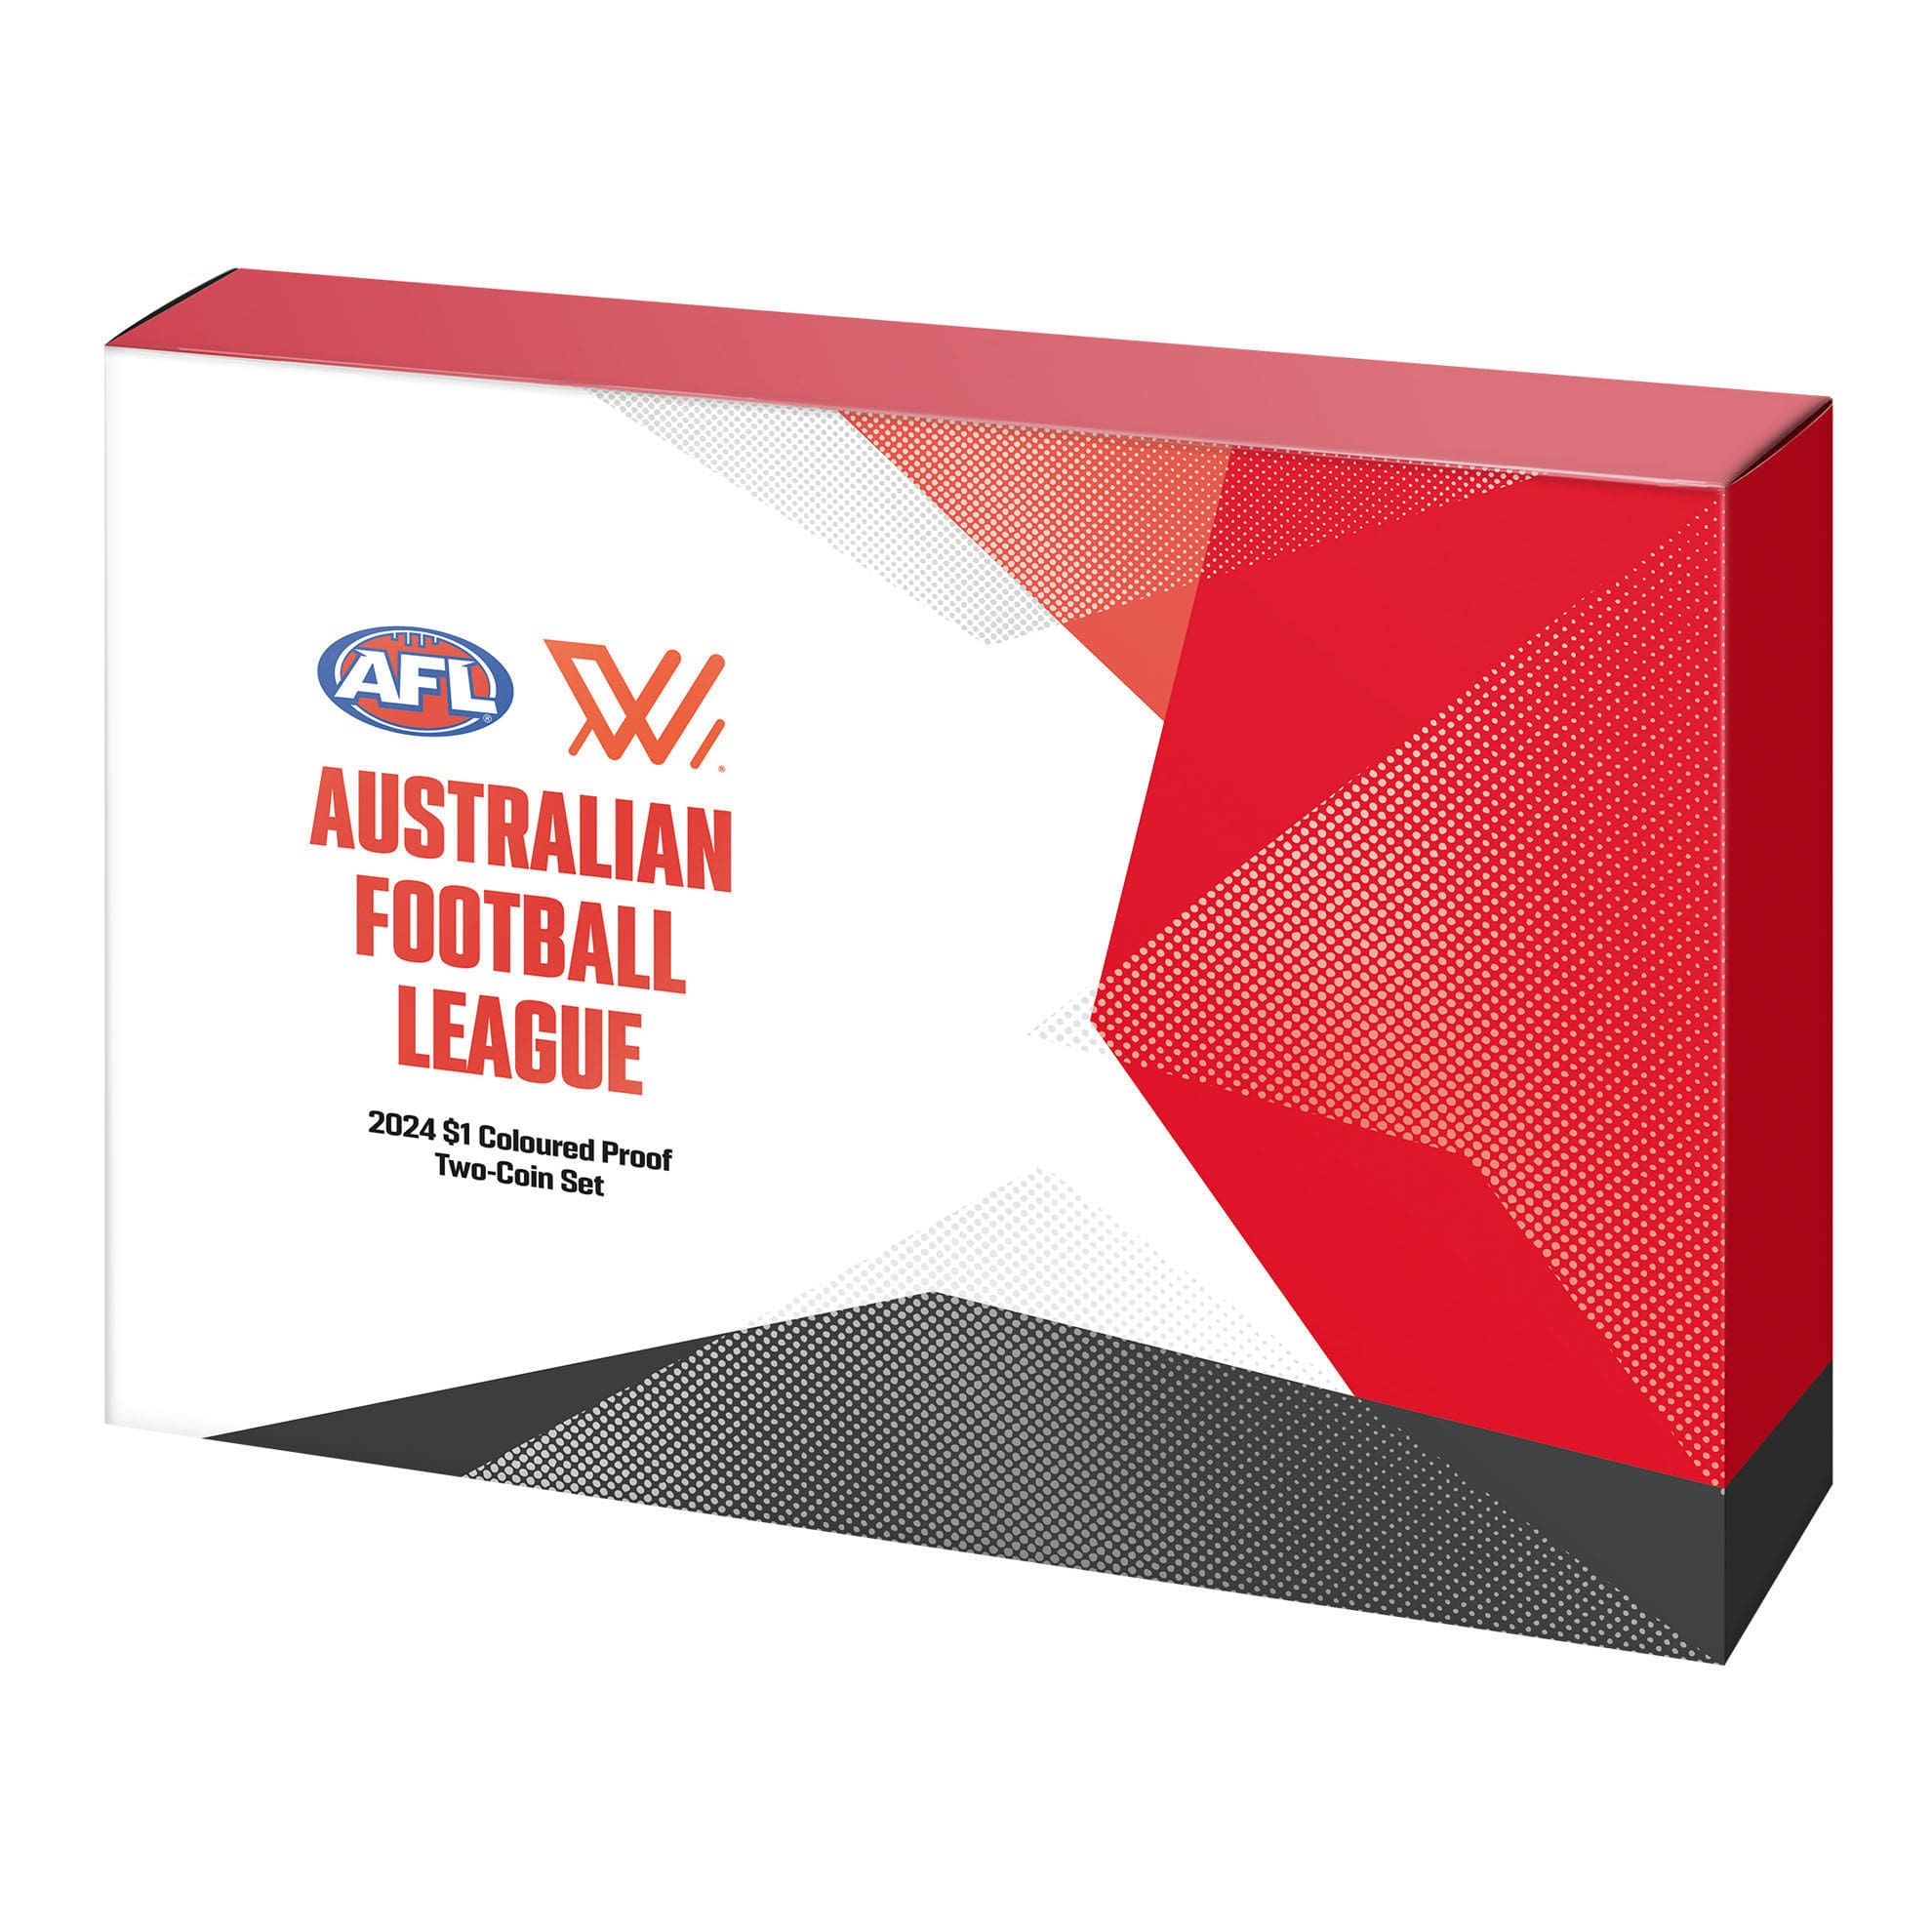 2024 $1 Australian Football League Coloured Proof 2 Coin Set - Front of Box